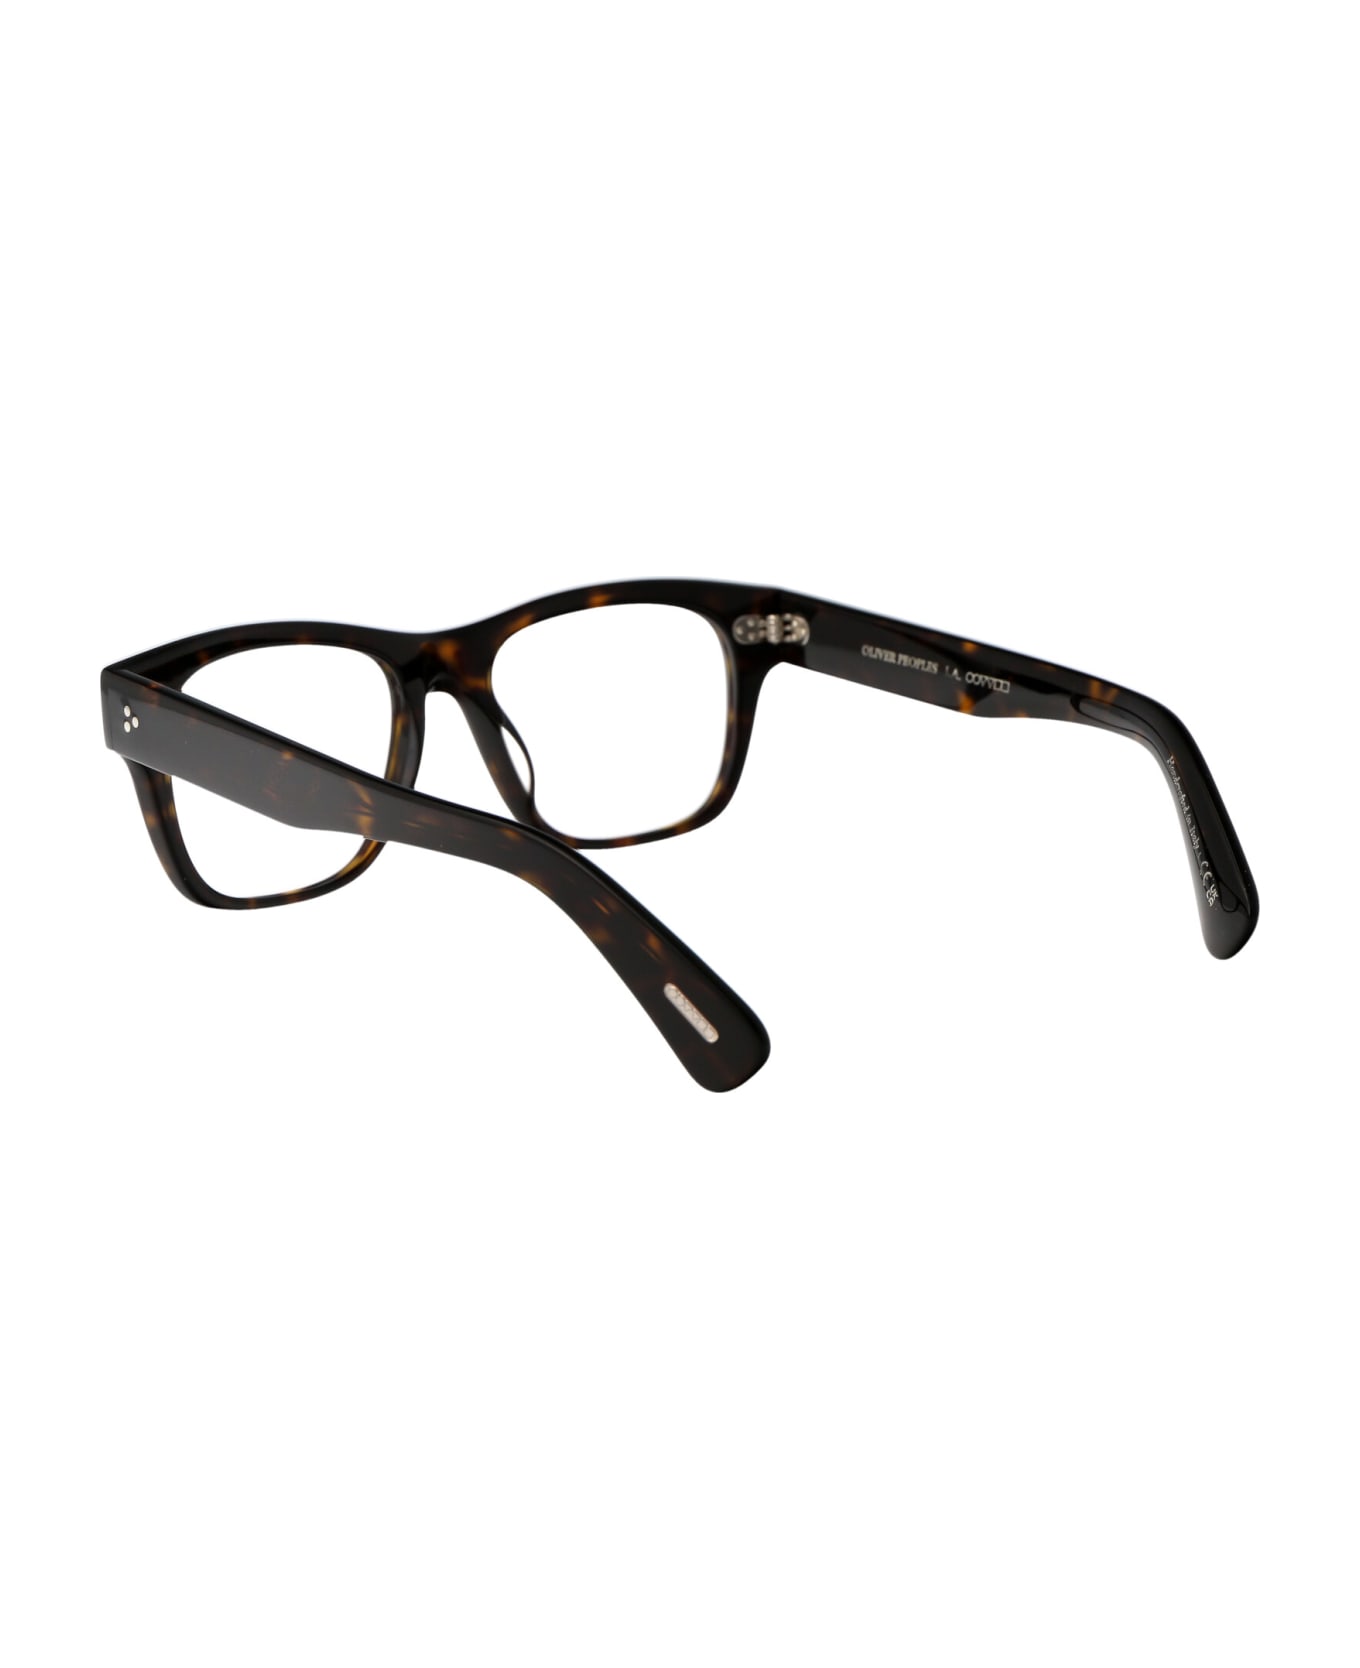 Oliver Peoples Birell Glasses - 1009 362